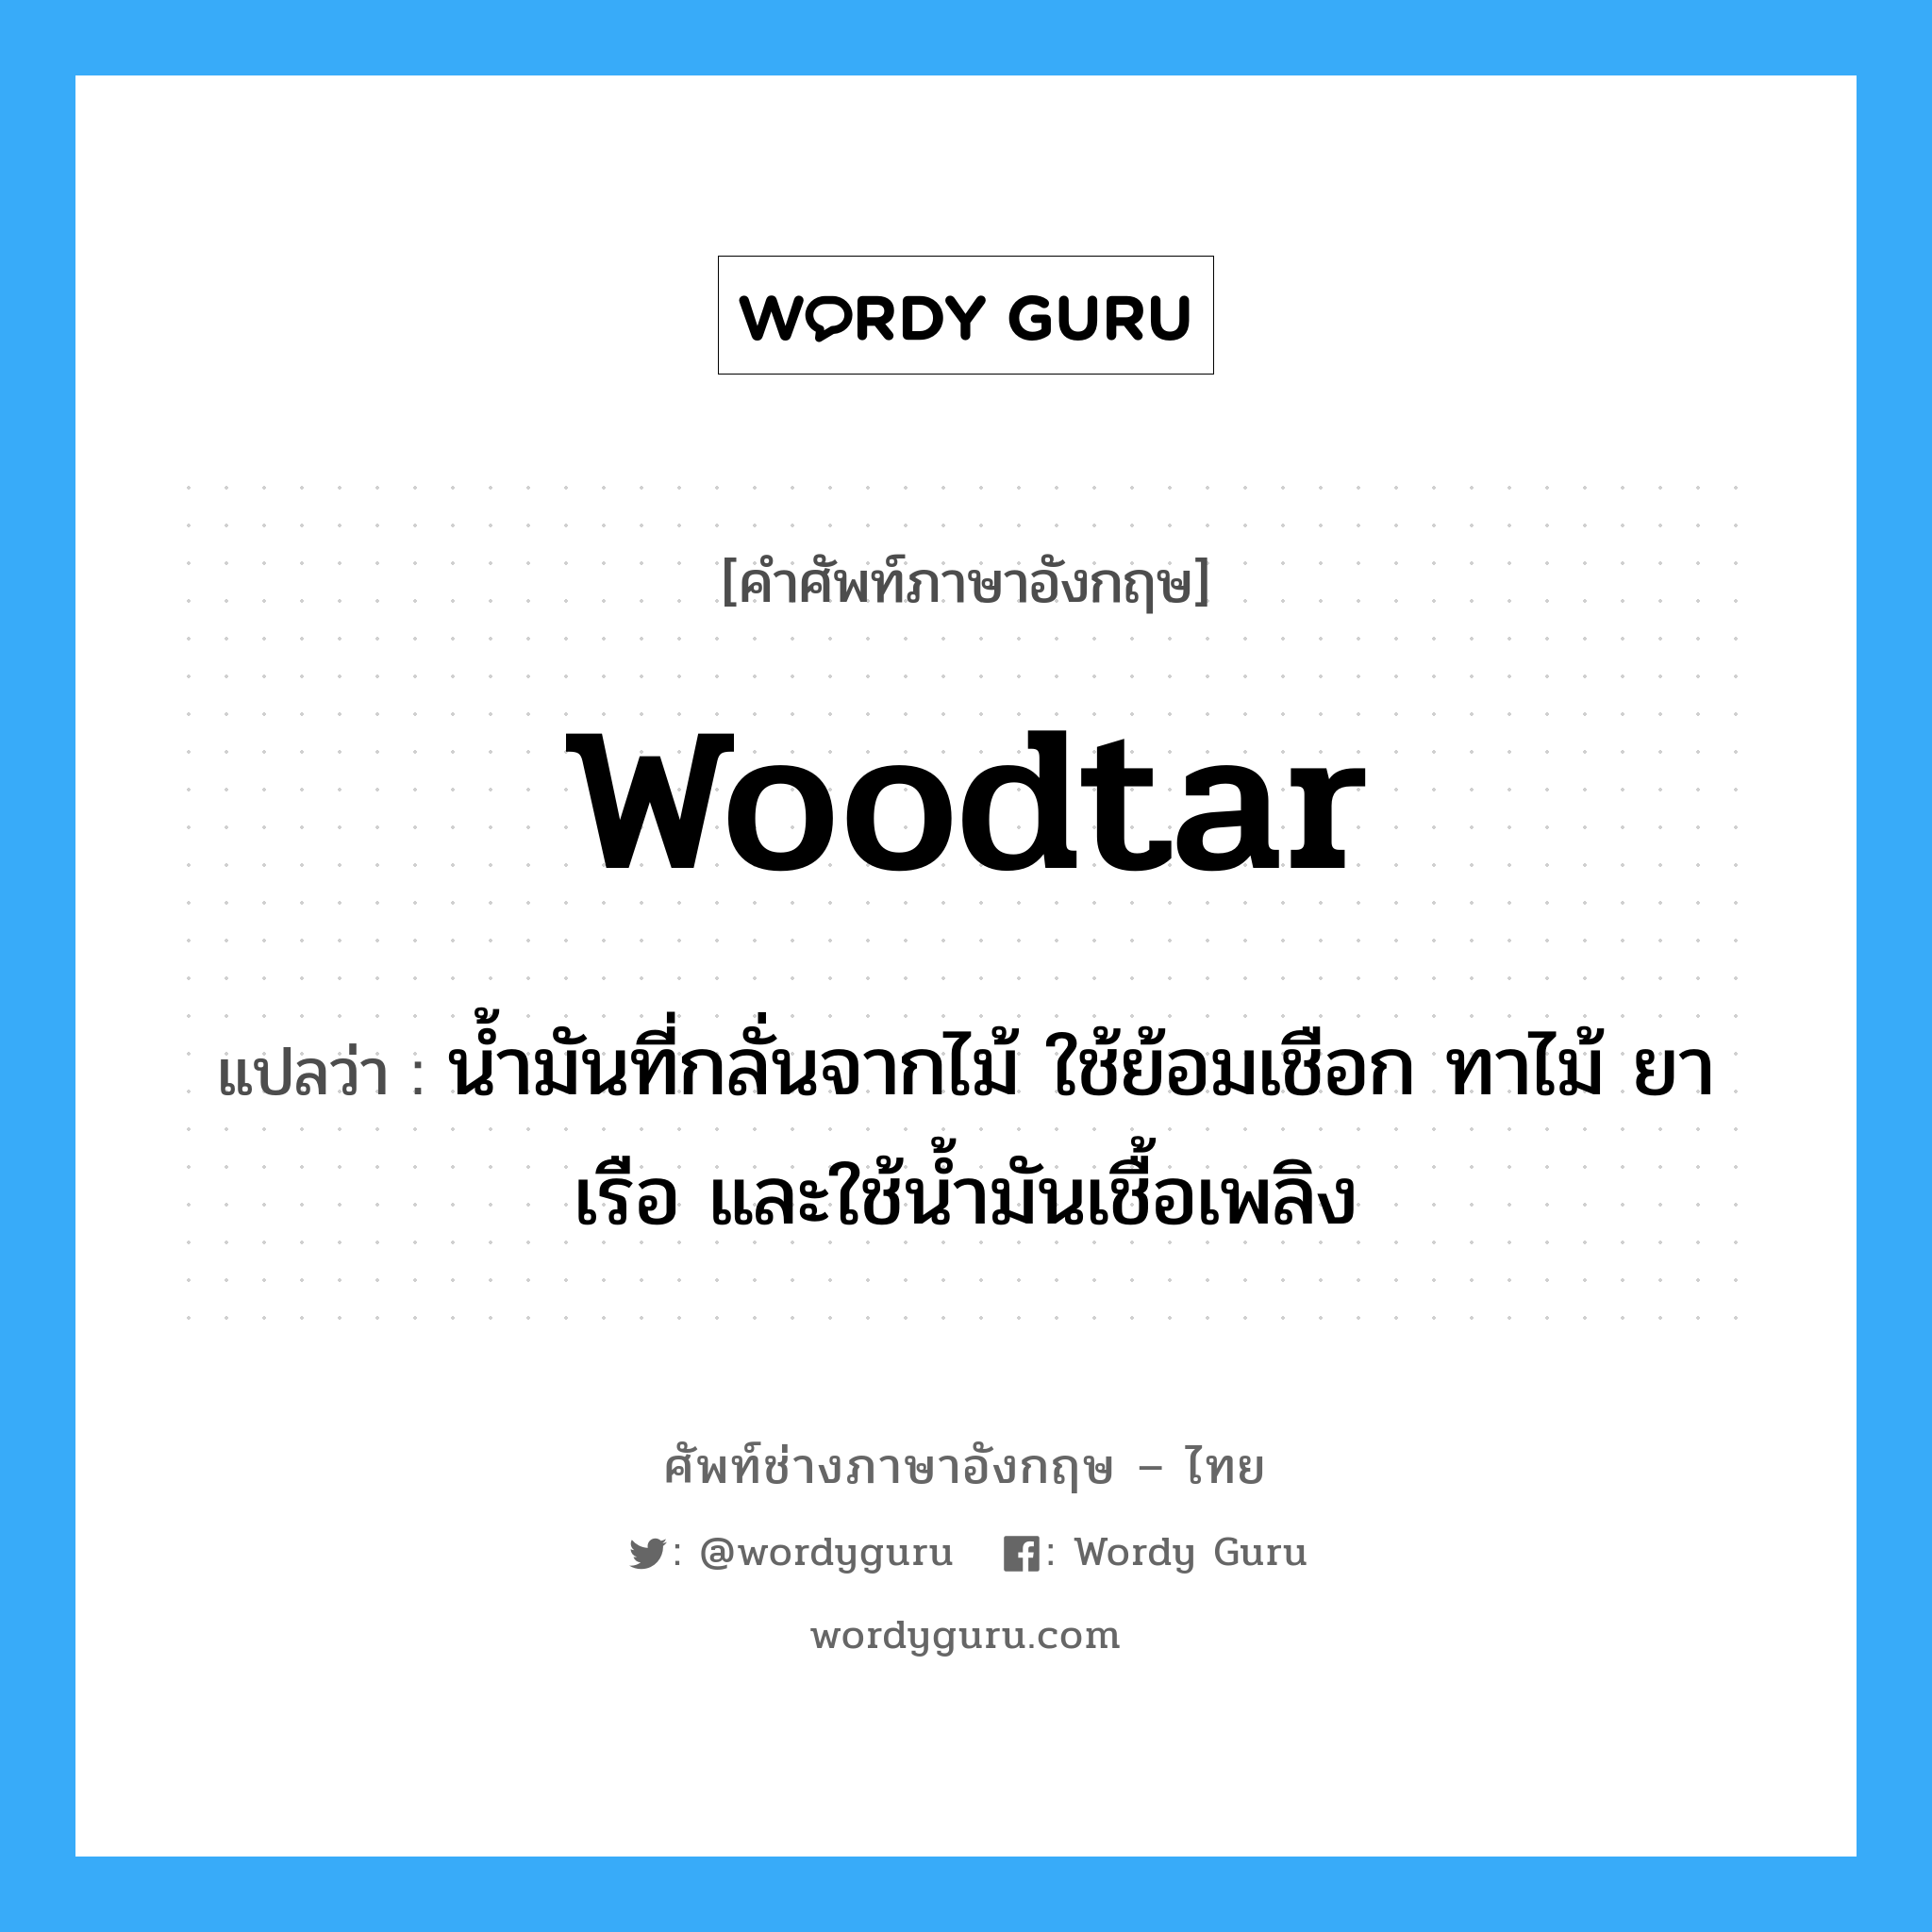 woodtar แปลว่า?, คำศัพท์ช่างภาษาอังกฤษ - ไทย woodtar คำศัพท์ภาษาอังกฤษ woodtar แปลว่า น้ำมันที่กลั่นจากไม้ ใช้ย้อมเชือก ทาไม้ ยาเรือ และใช้น้ำมันเชื้อเพลิง